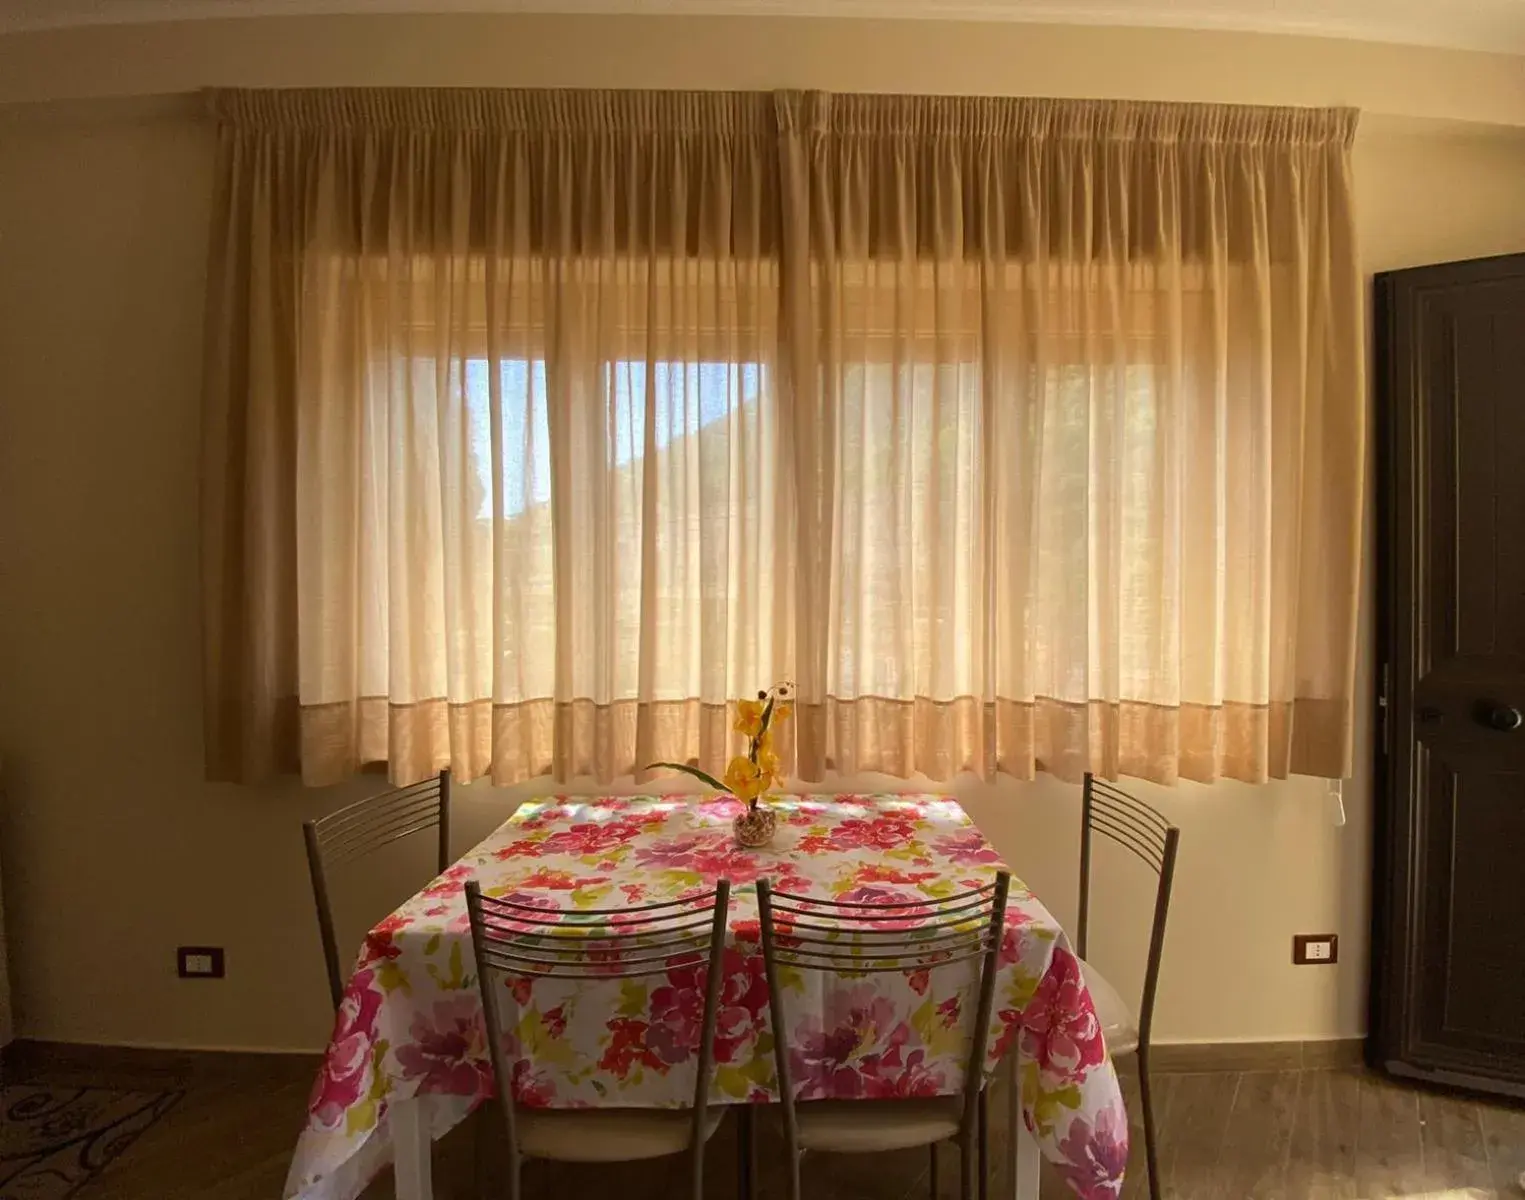 Area and facilities, Dining Area in Hotel Soleado